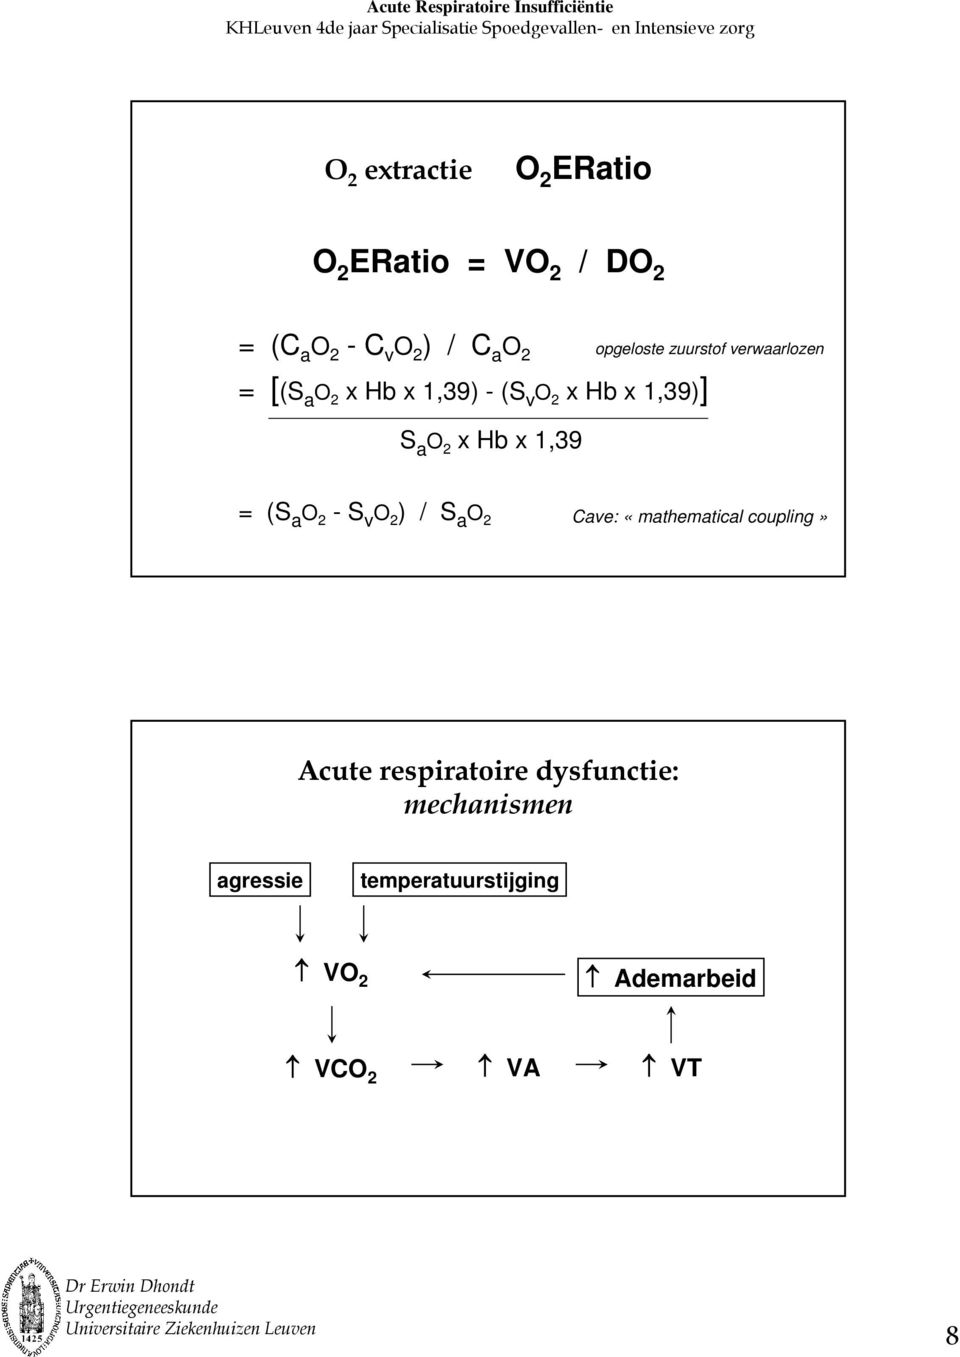 zuurstof verwaarlozen = (S a -S v ) / S a Cave: «mathematical